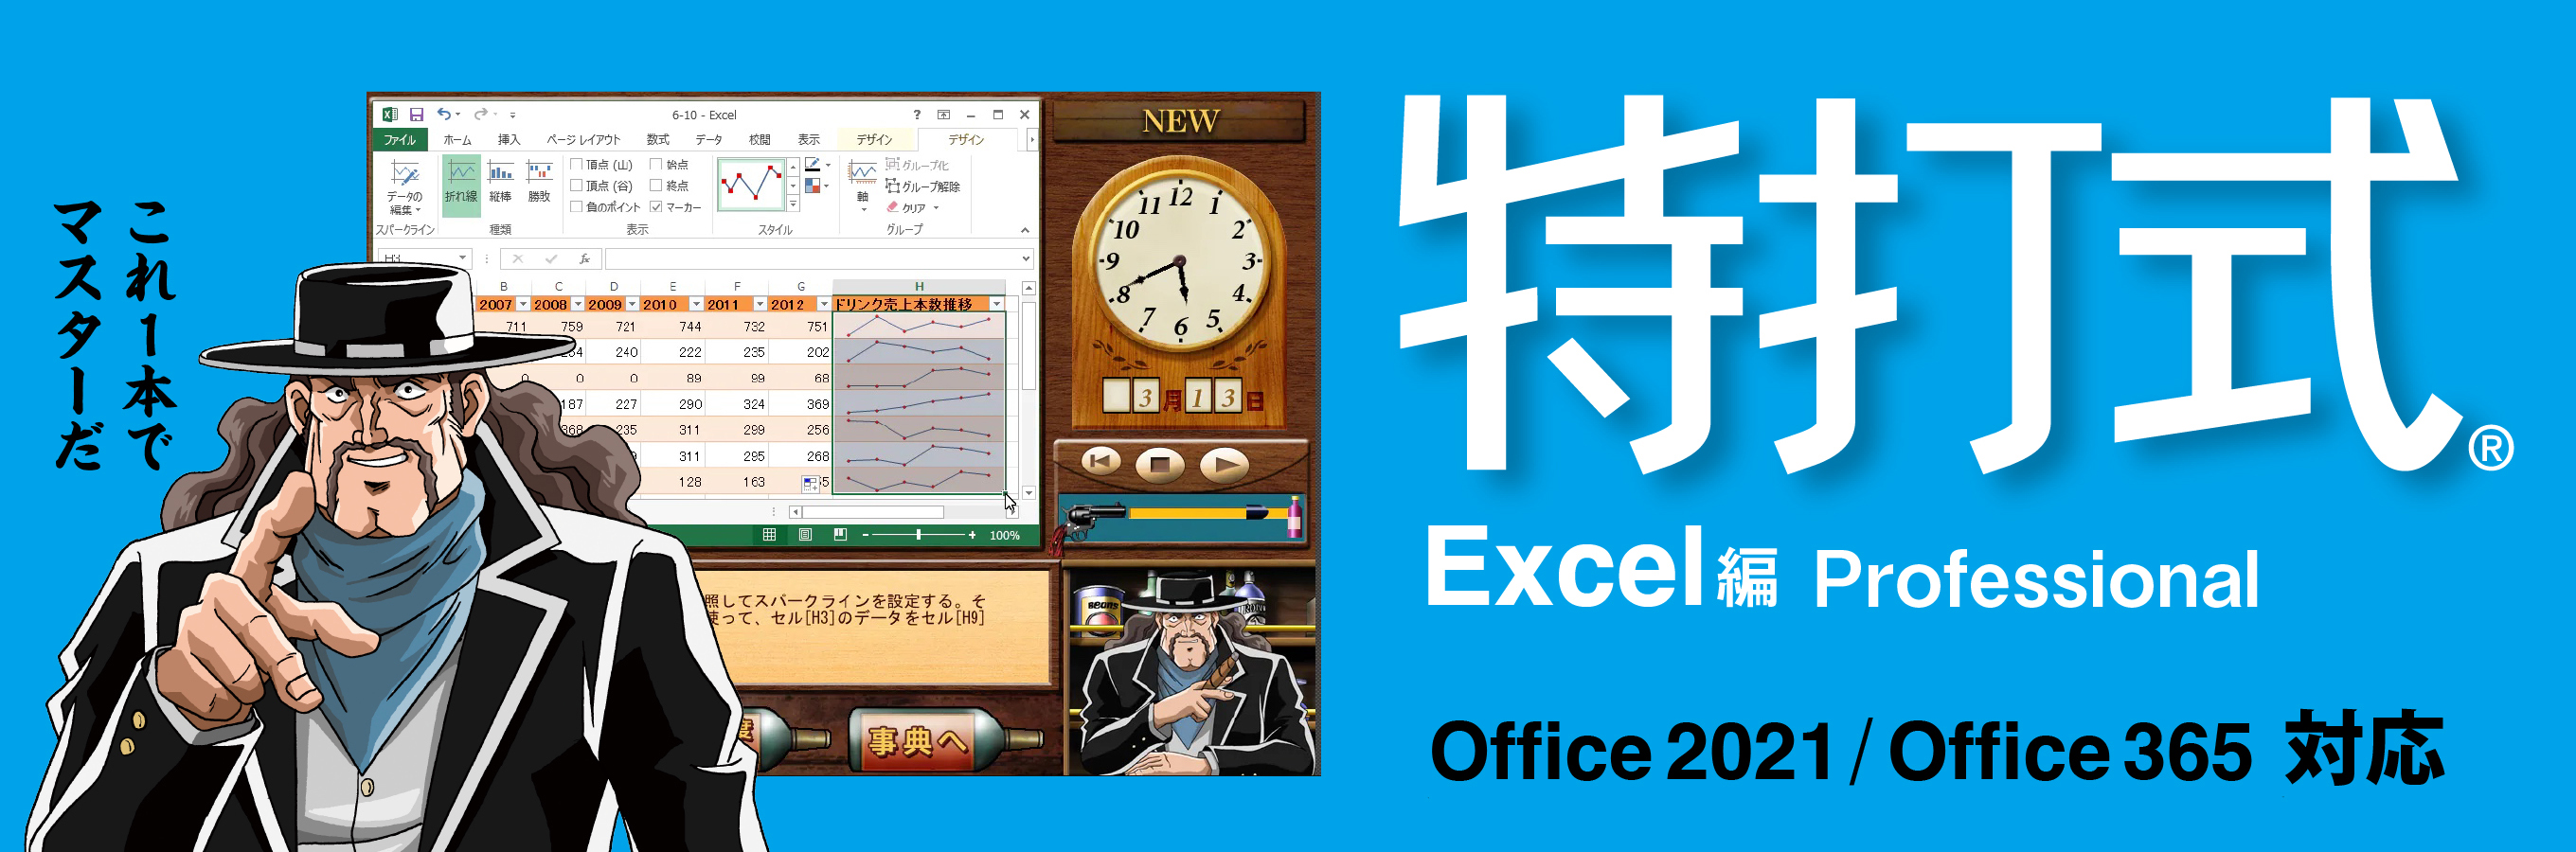 Office2021対応「特打式 Excel編 Professional」